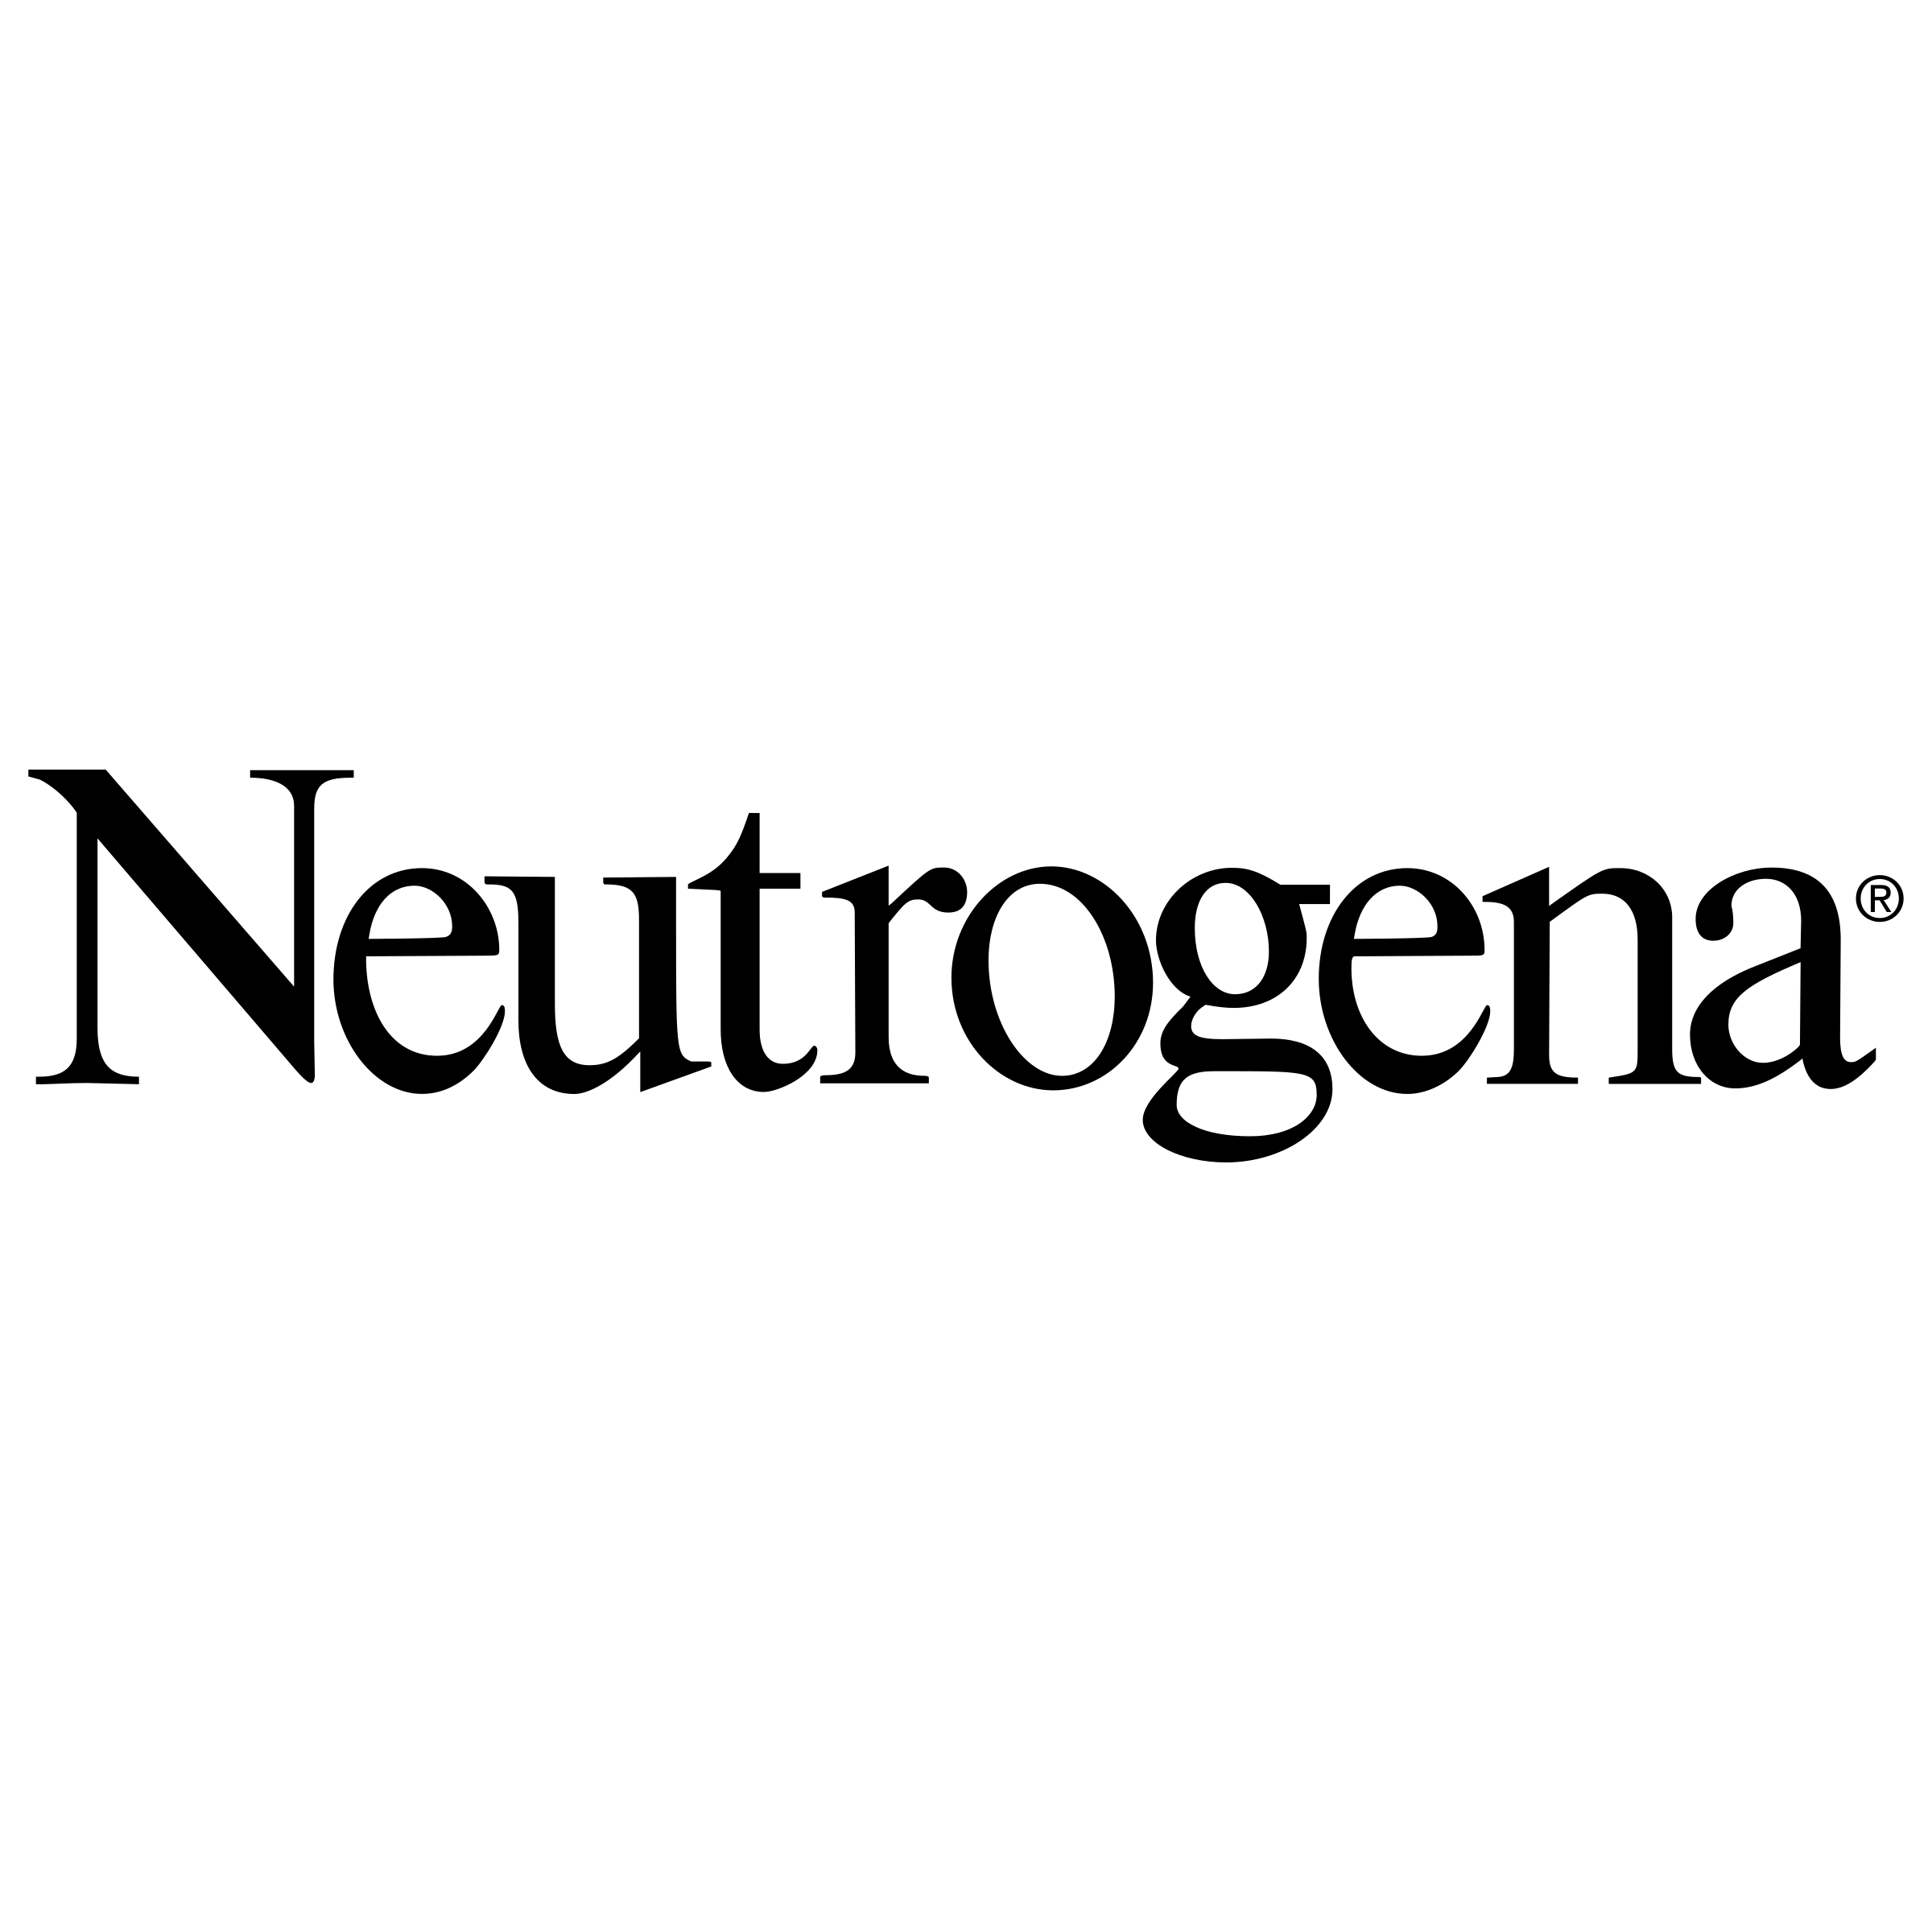 neutrogena logo.png